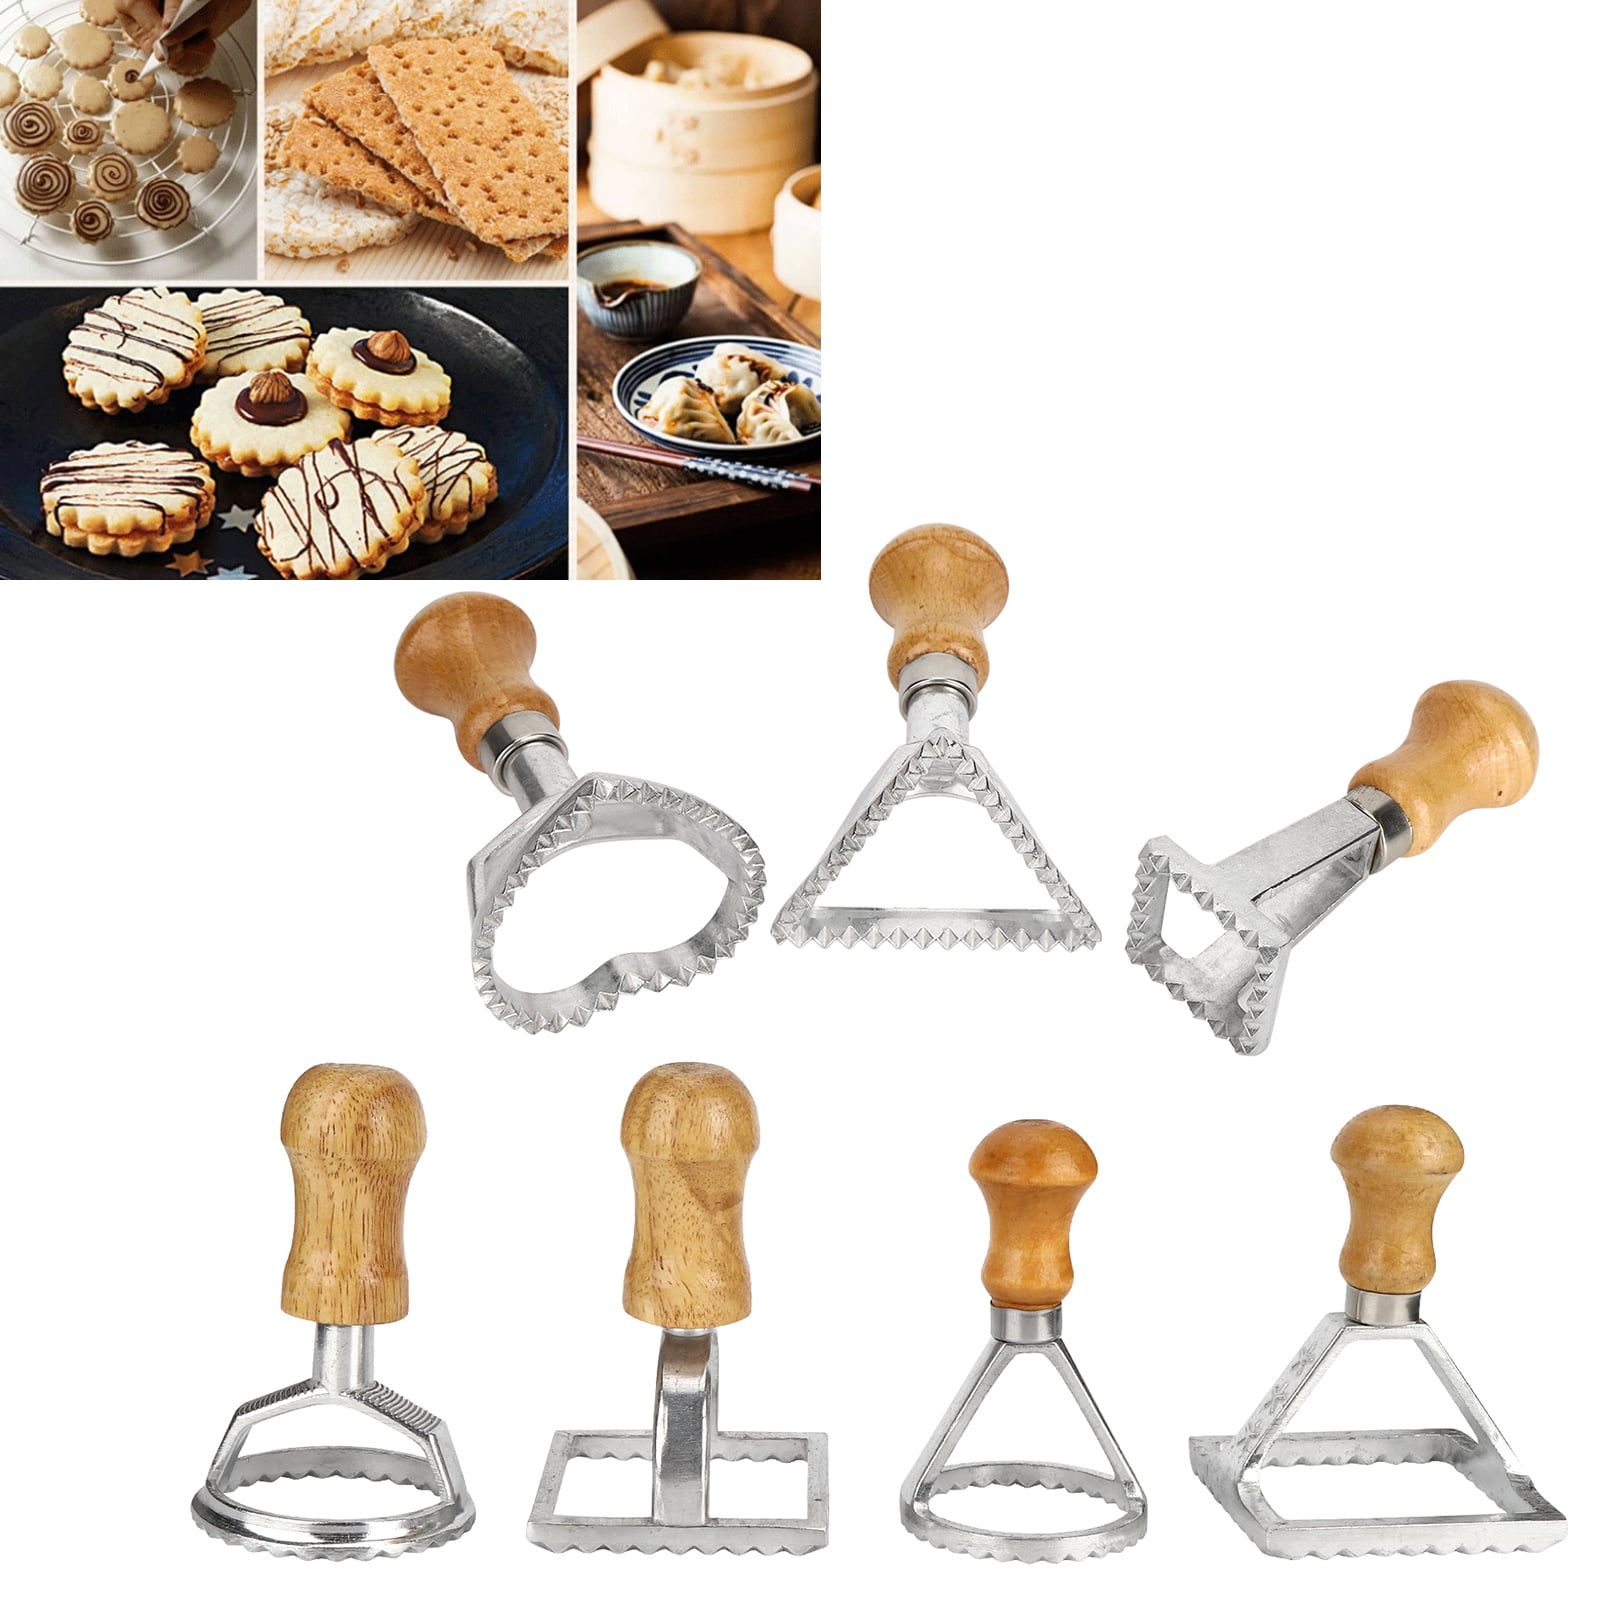 7PCS/Set Dumplings Molds DIY Cookies Cakes Pastry Pasta Stamp Press Cutter Us 